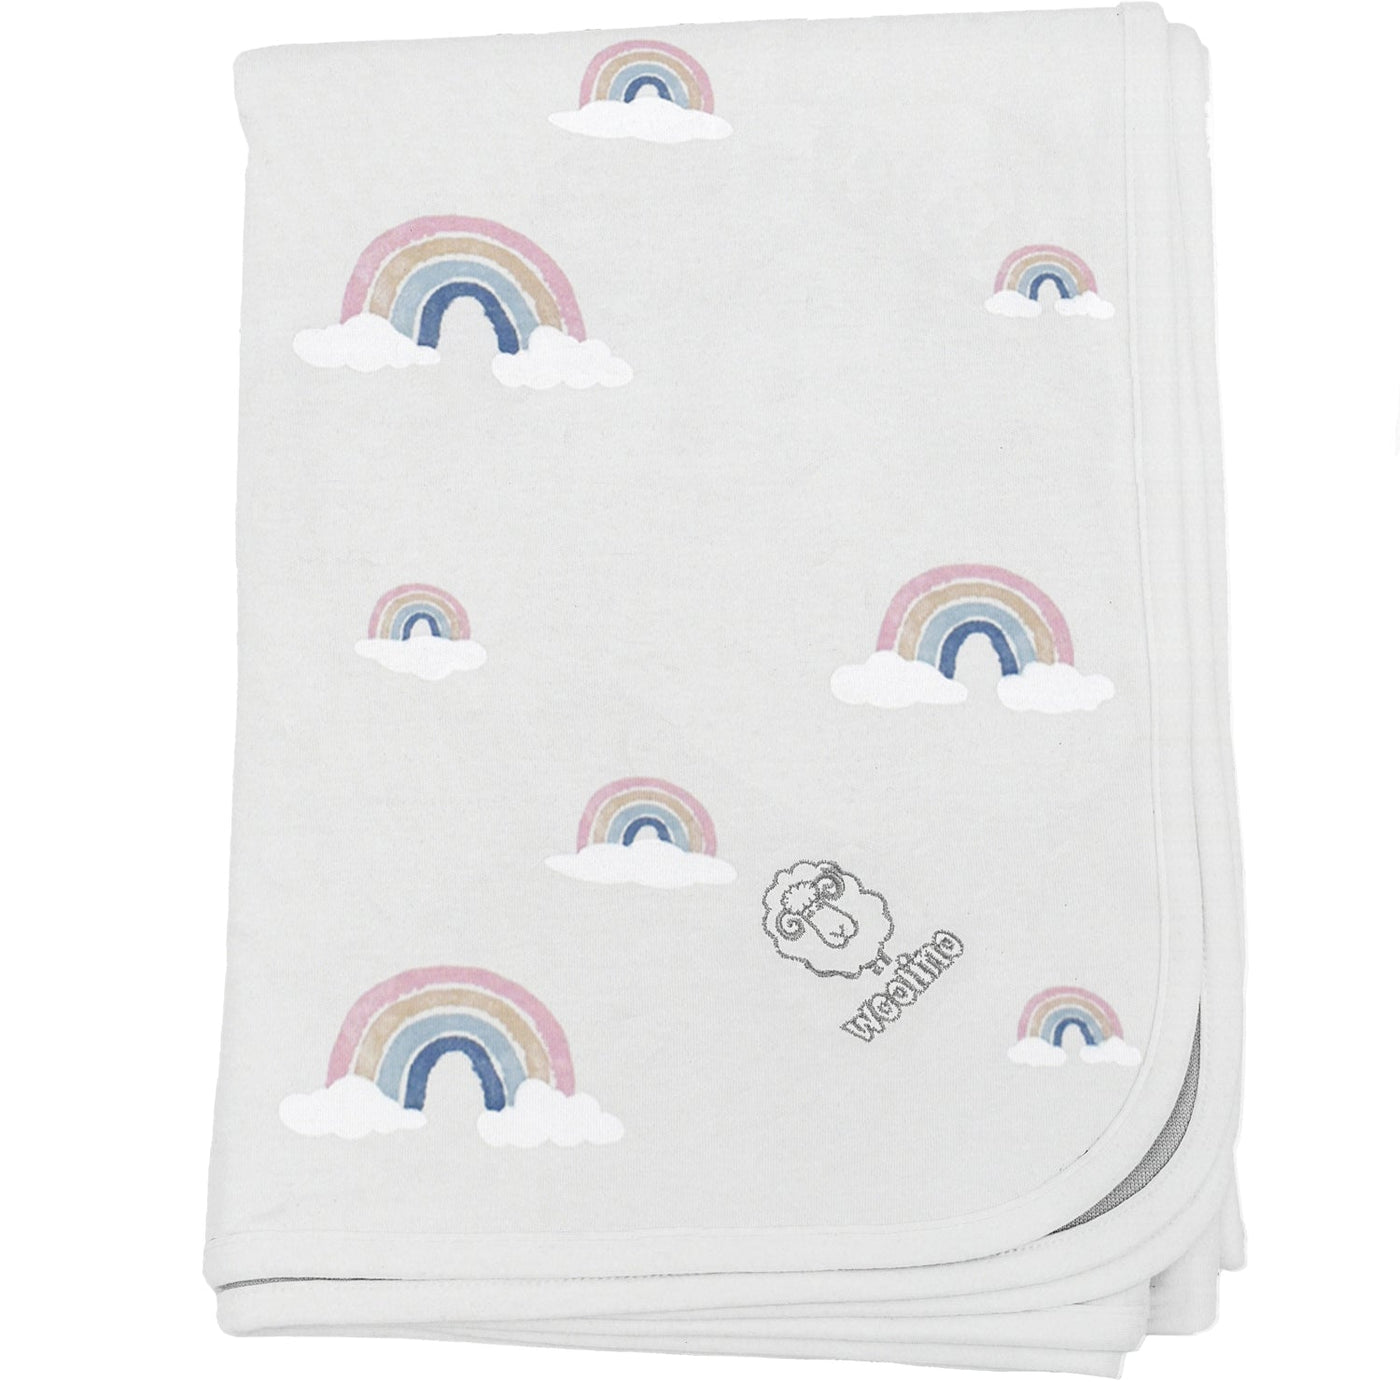 Imperfect Toddler Blanket, 4 Season® Merino Wool Blanket, 52.5" x 40", Rainbow